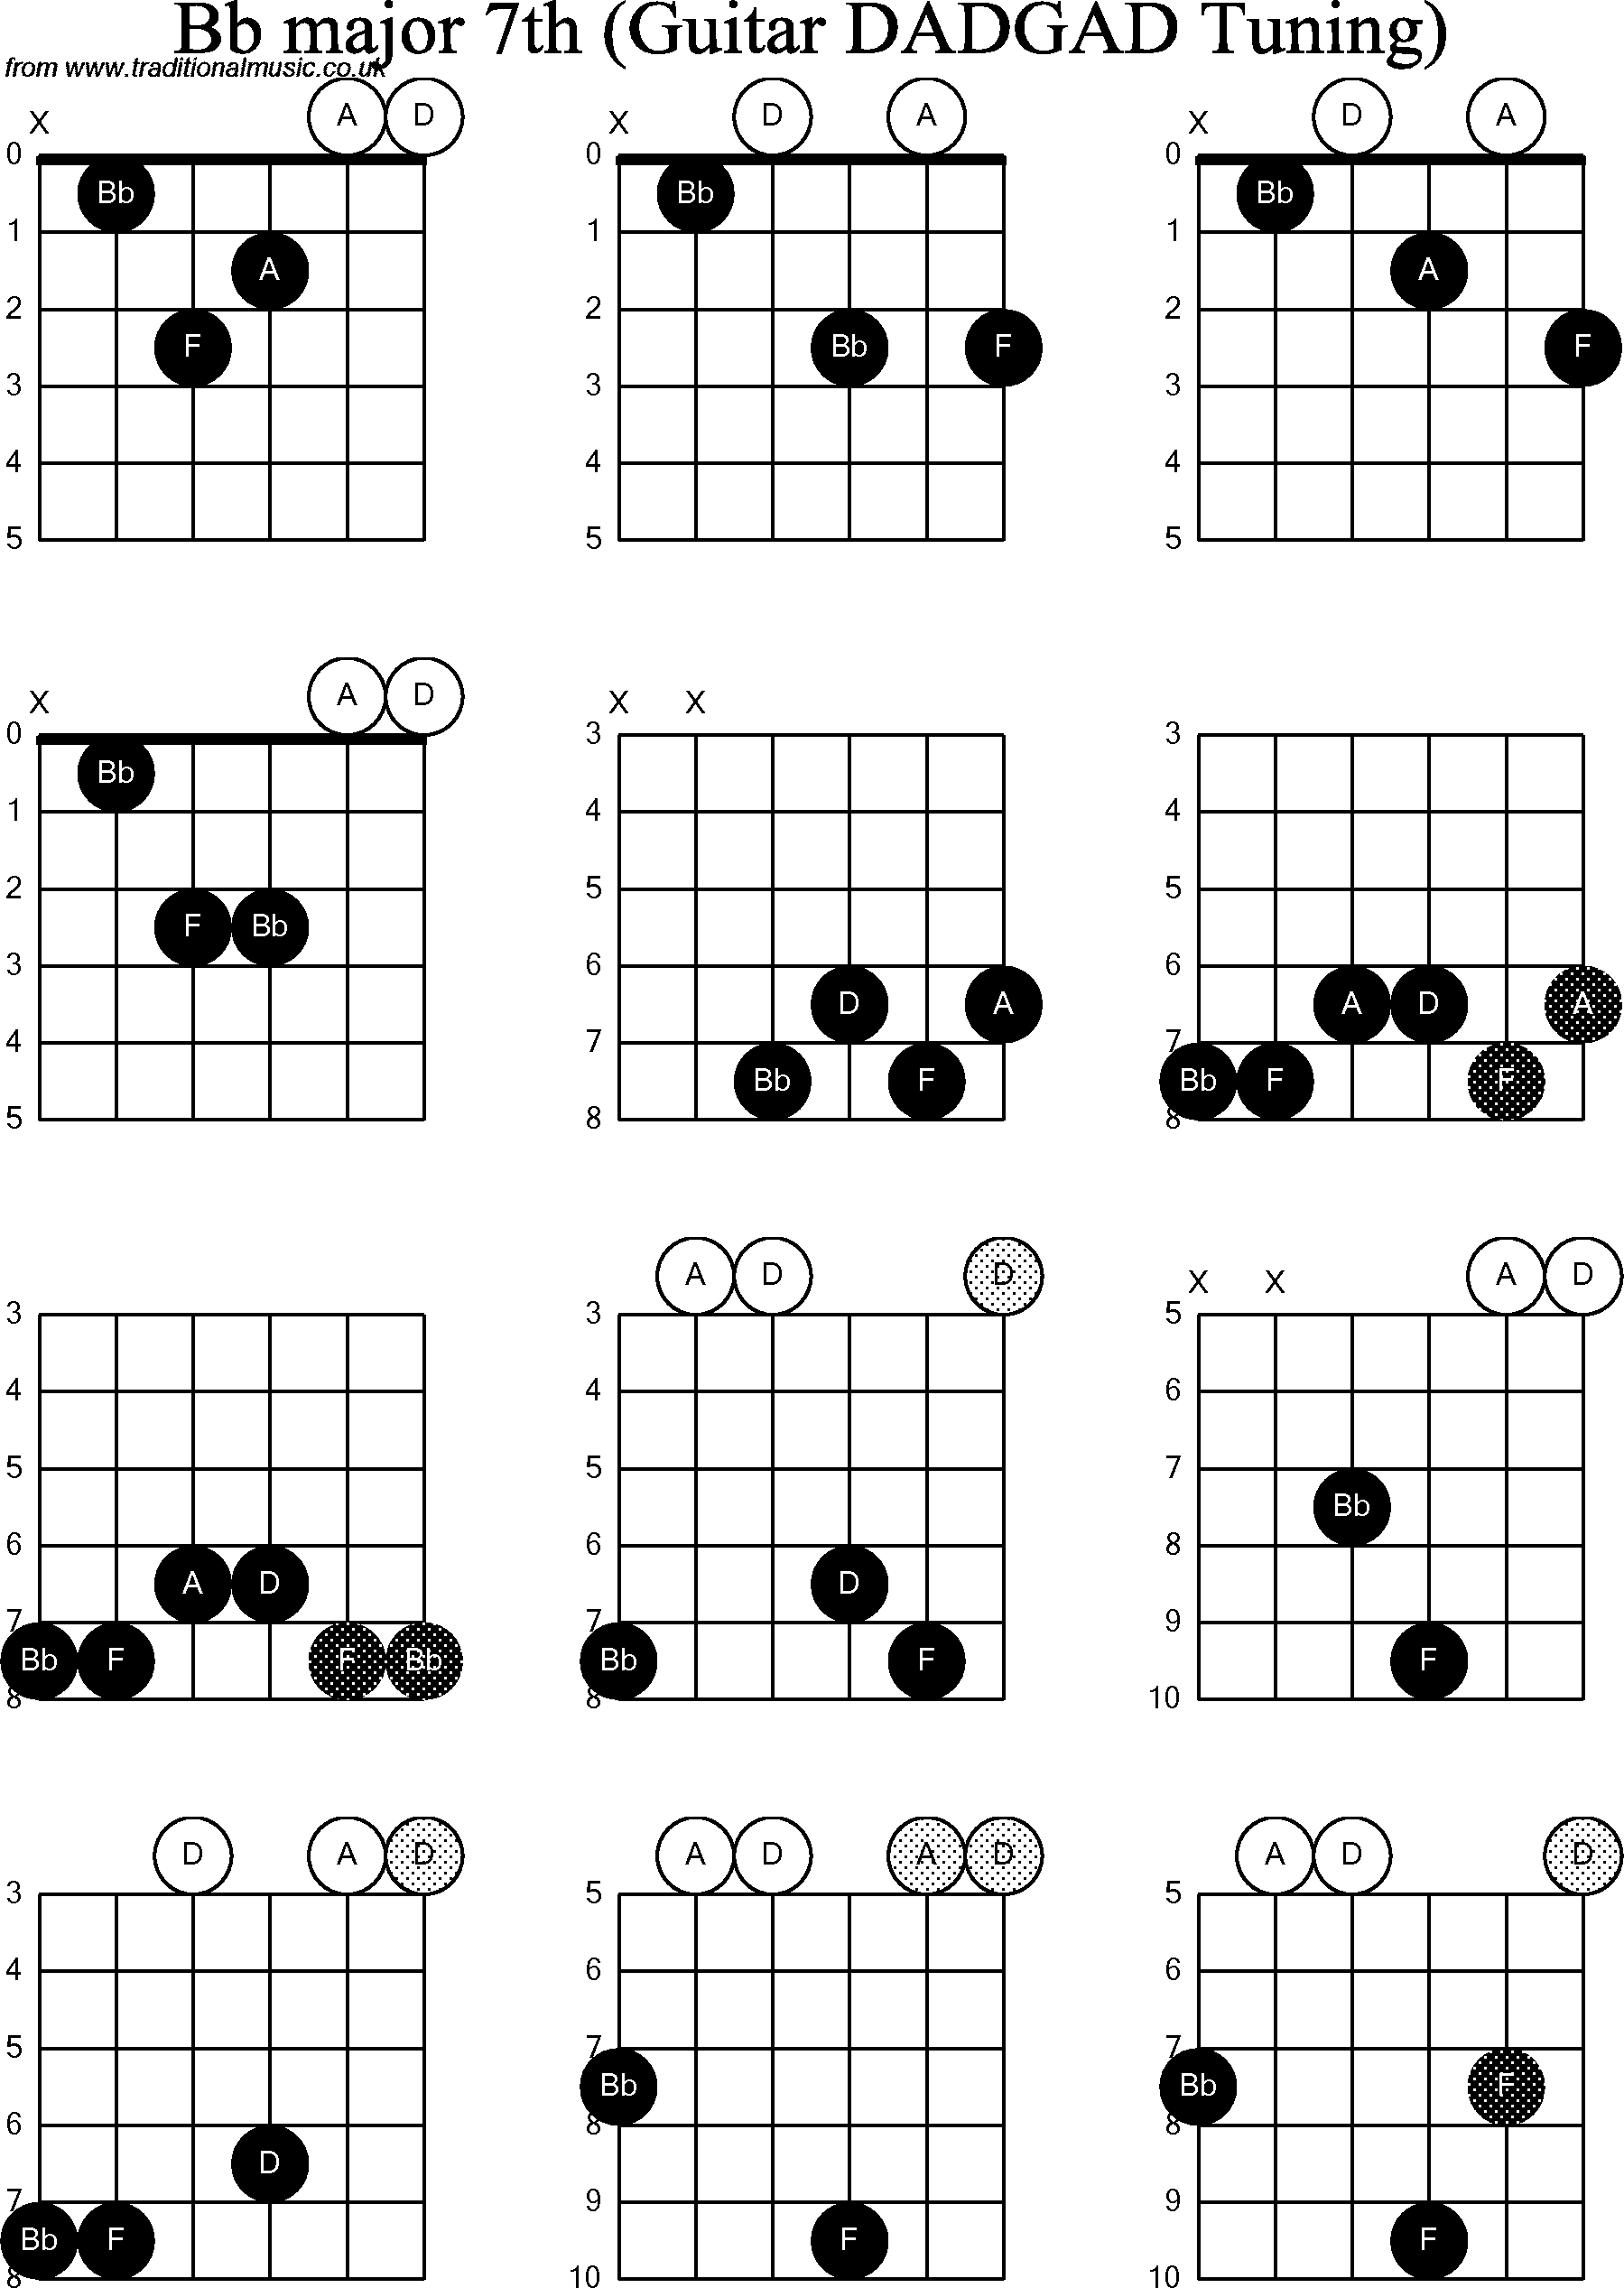 Chord Diagrams for D Modal Guitar(DADGAD), Bb Major7th